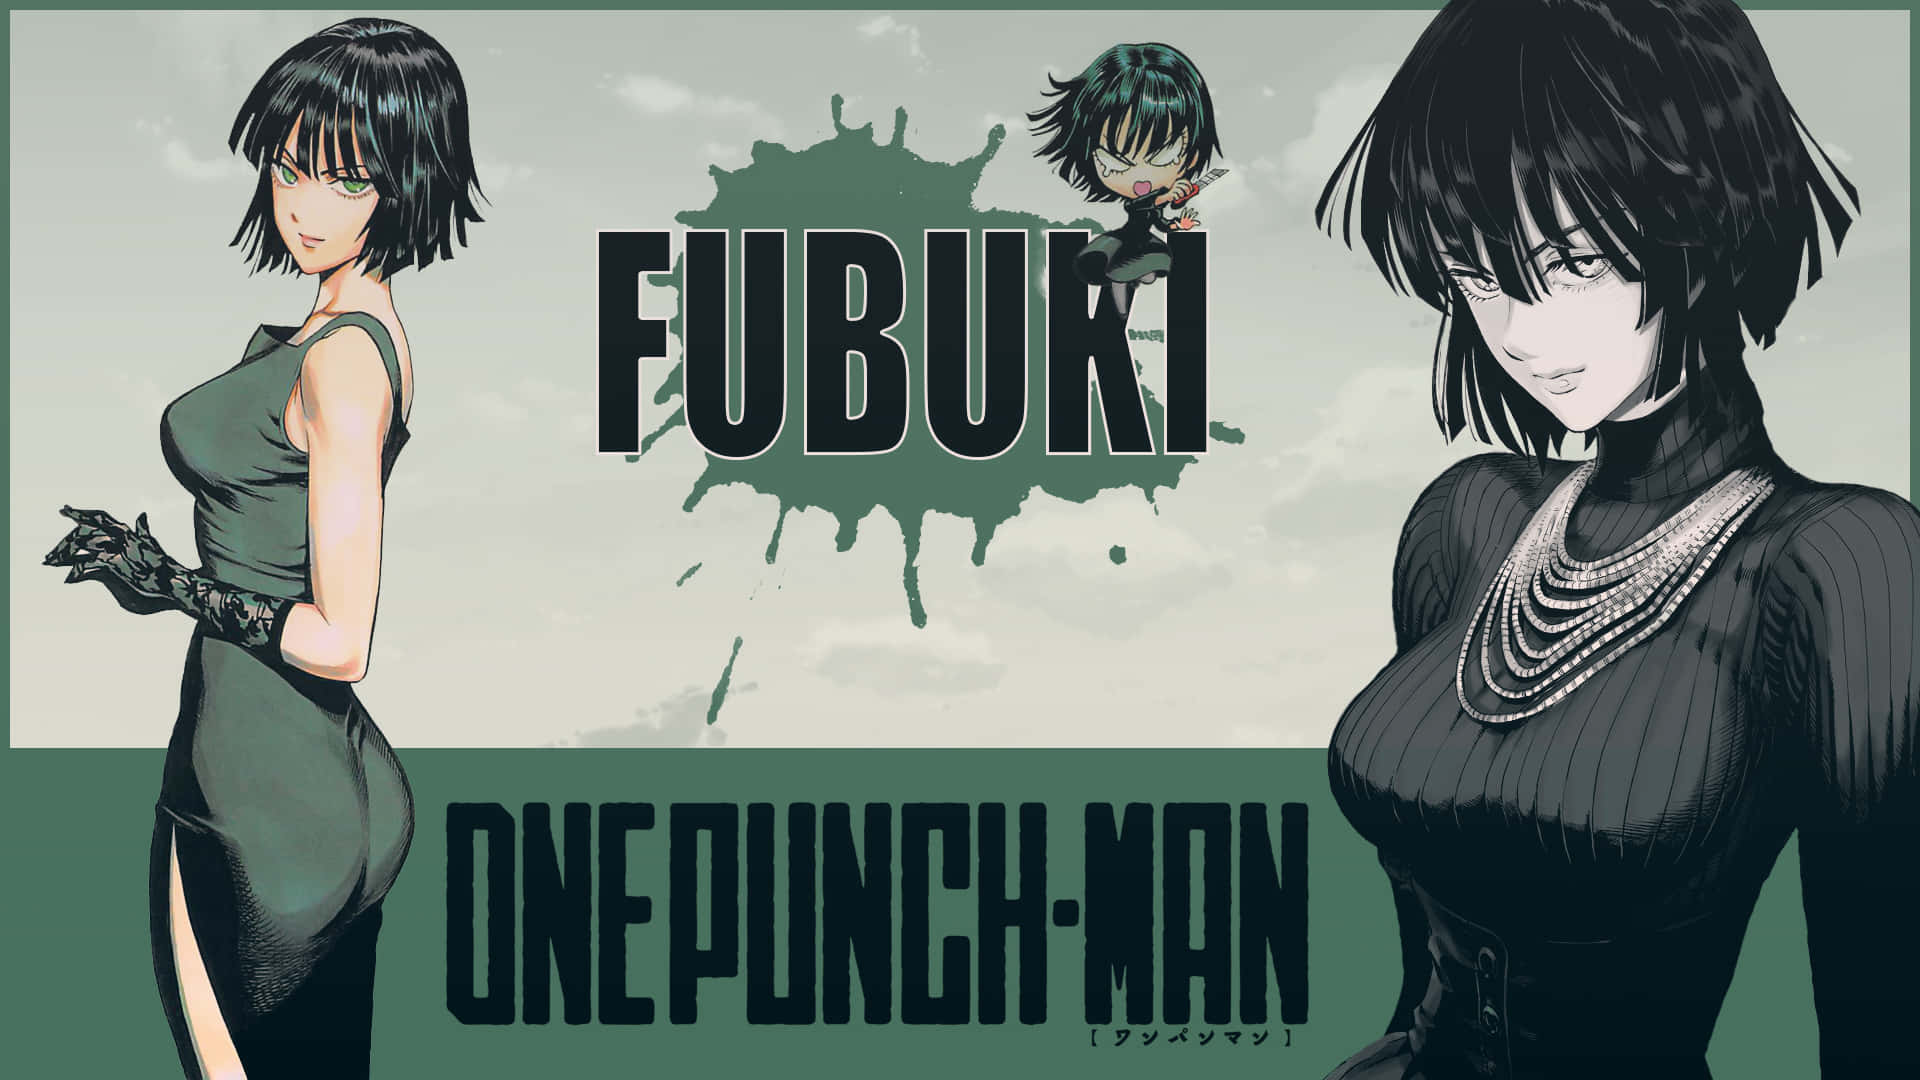 Fubuki Anime Wallpaper: A powerful hero in action Wallpaper